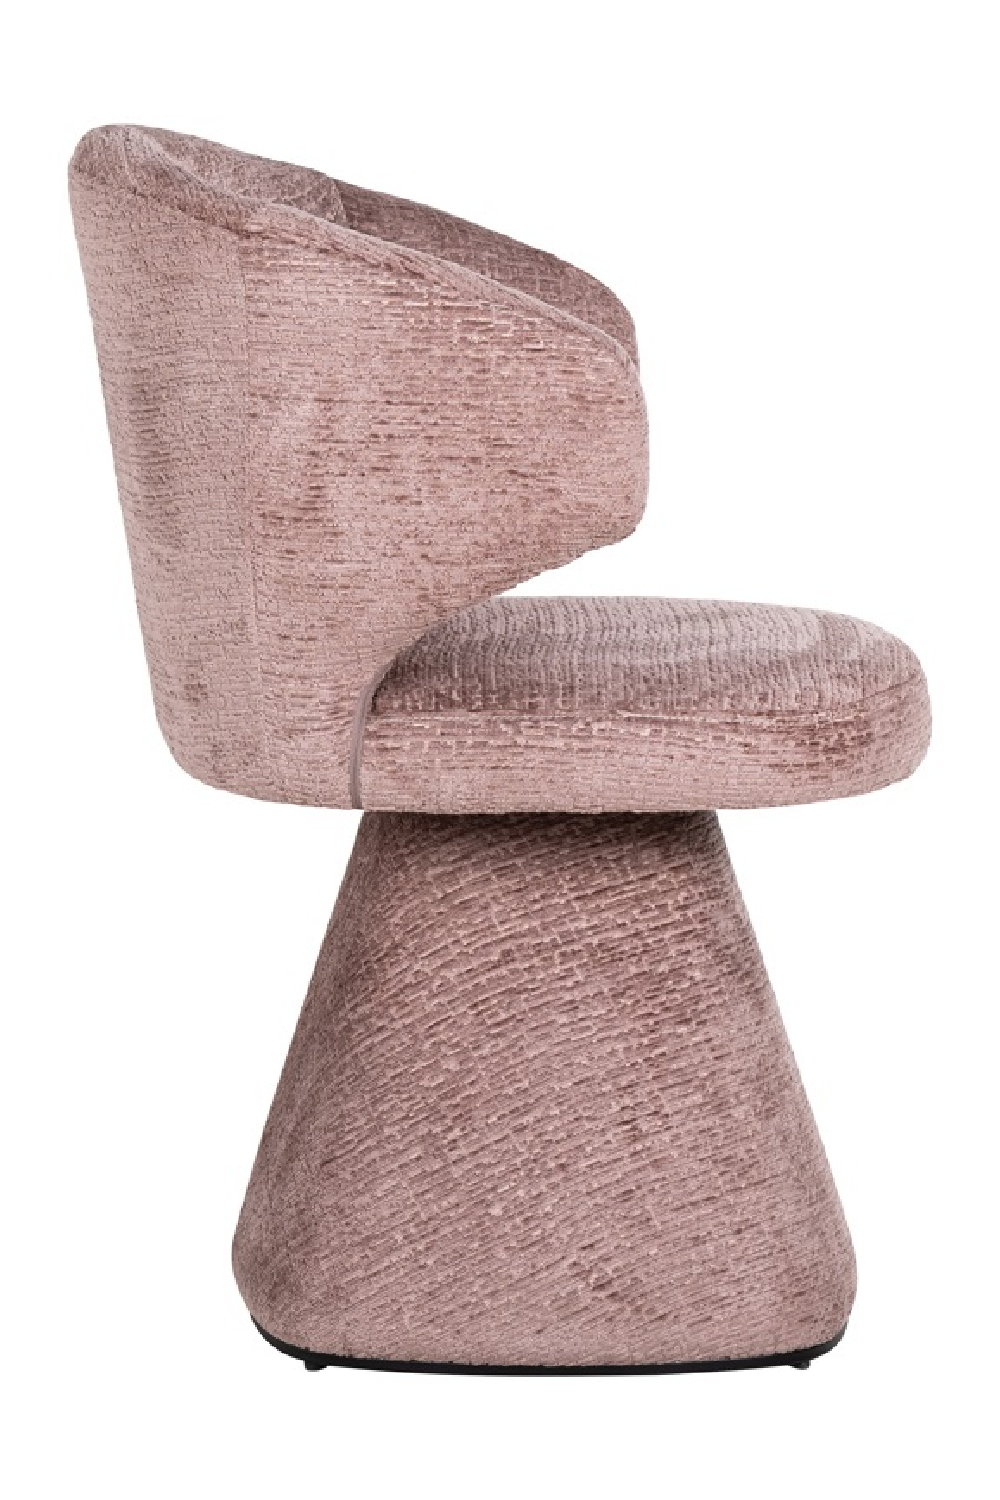 Modern Pedestal Armchair | OROA Gatsbi | Oroa.com